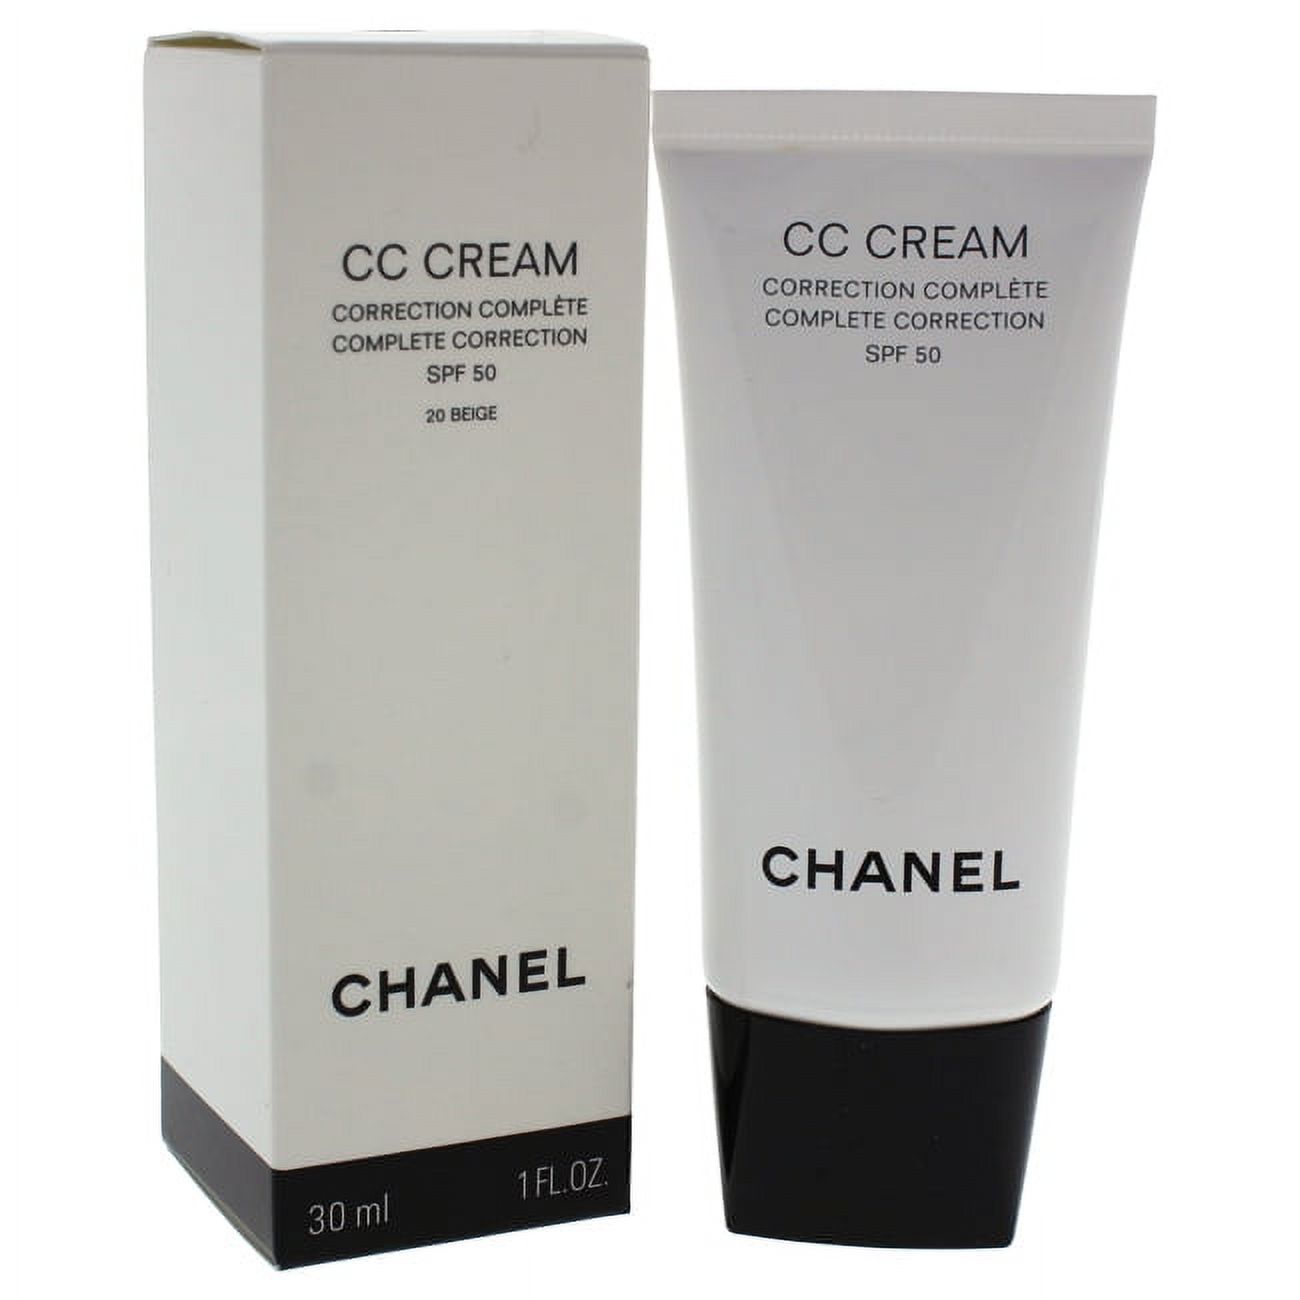 Chanel Women COSMETIC CC Cream Complete Correction SPF 50 - 20 Beige 1 oz - image 1 of 2